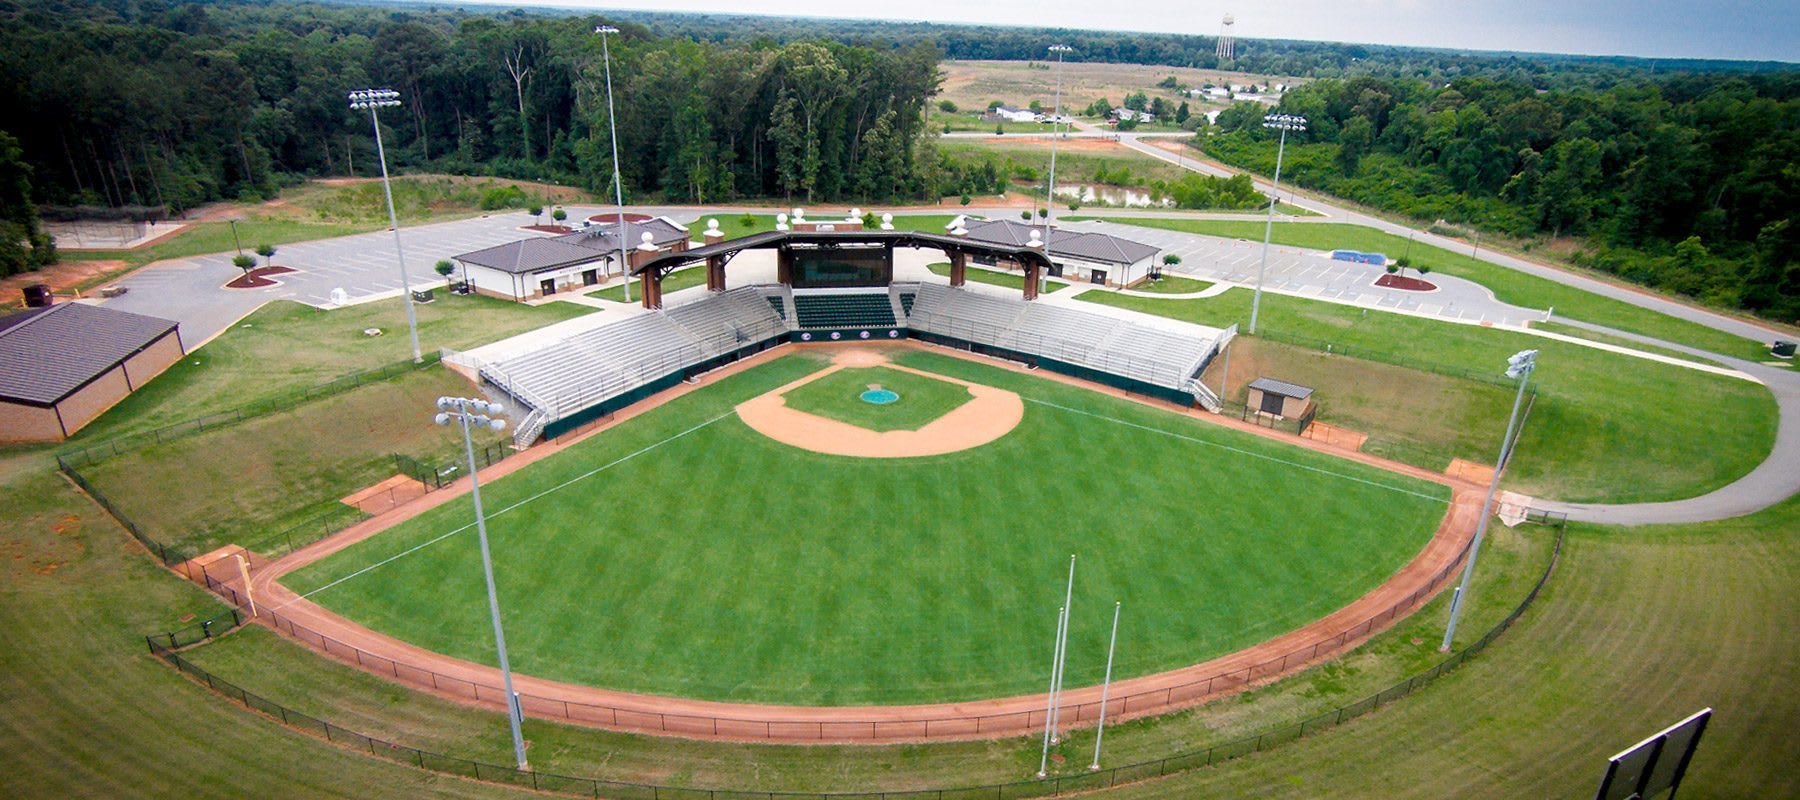 league little southeast region warner robins baseball field ga celebrates years softball